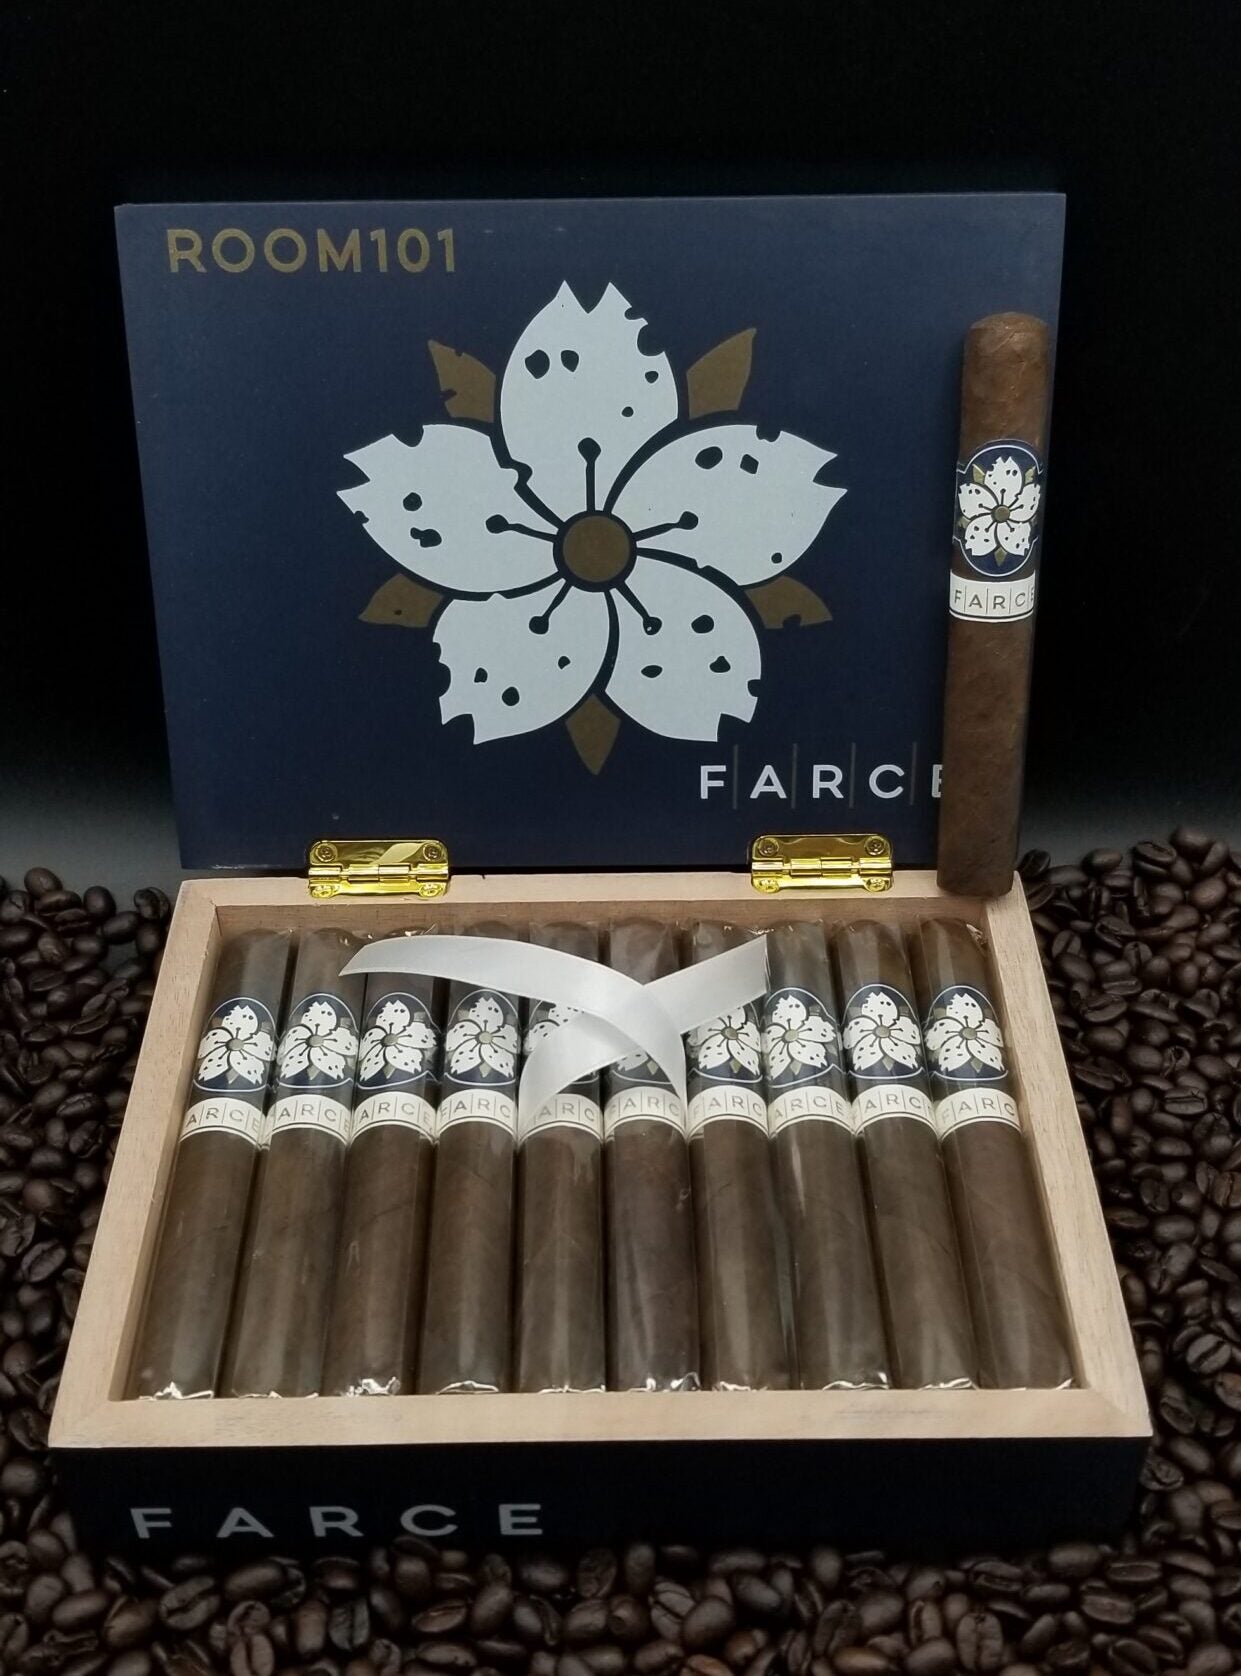 Room 101 Farce Maduro Robusto cigars supplied by Sir Louis Cigars